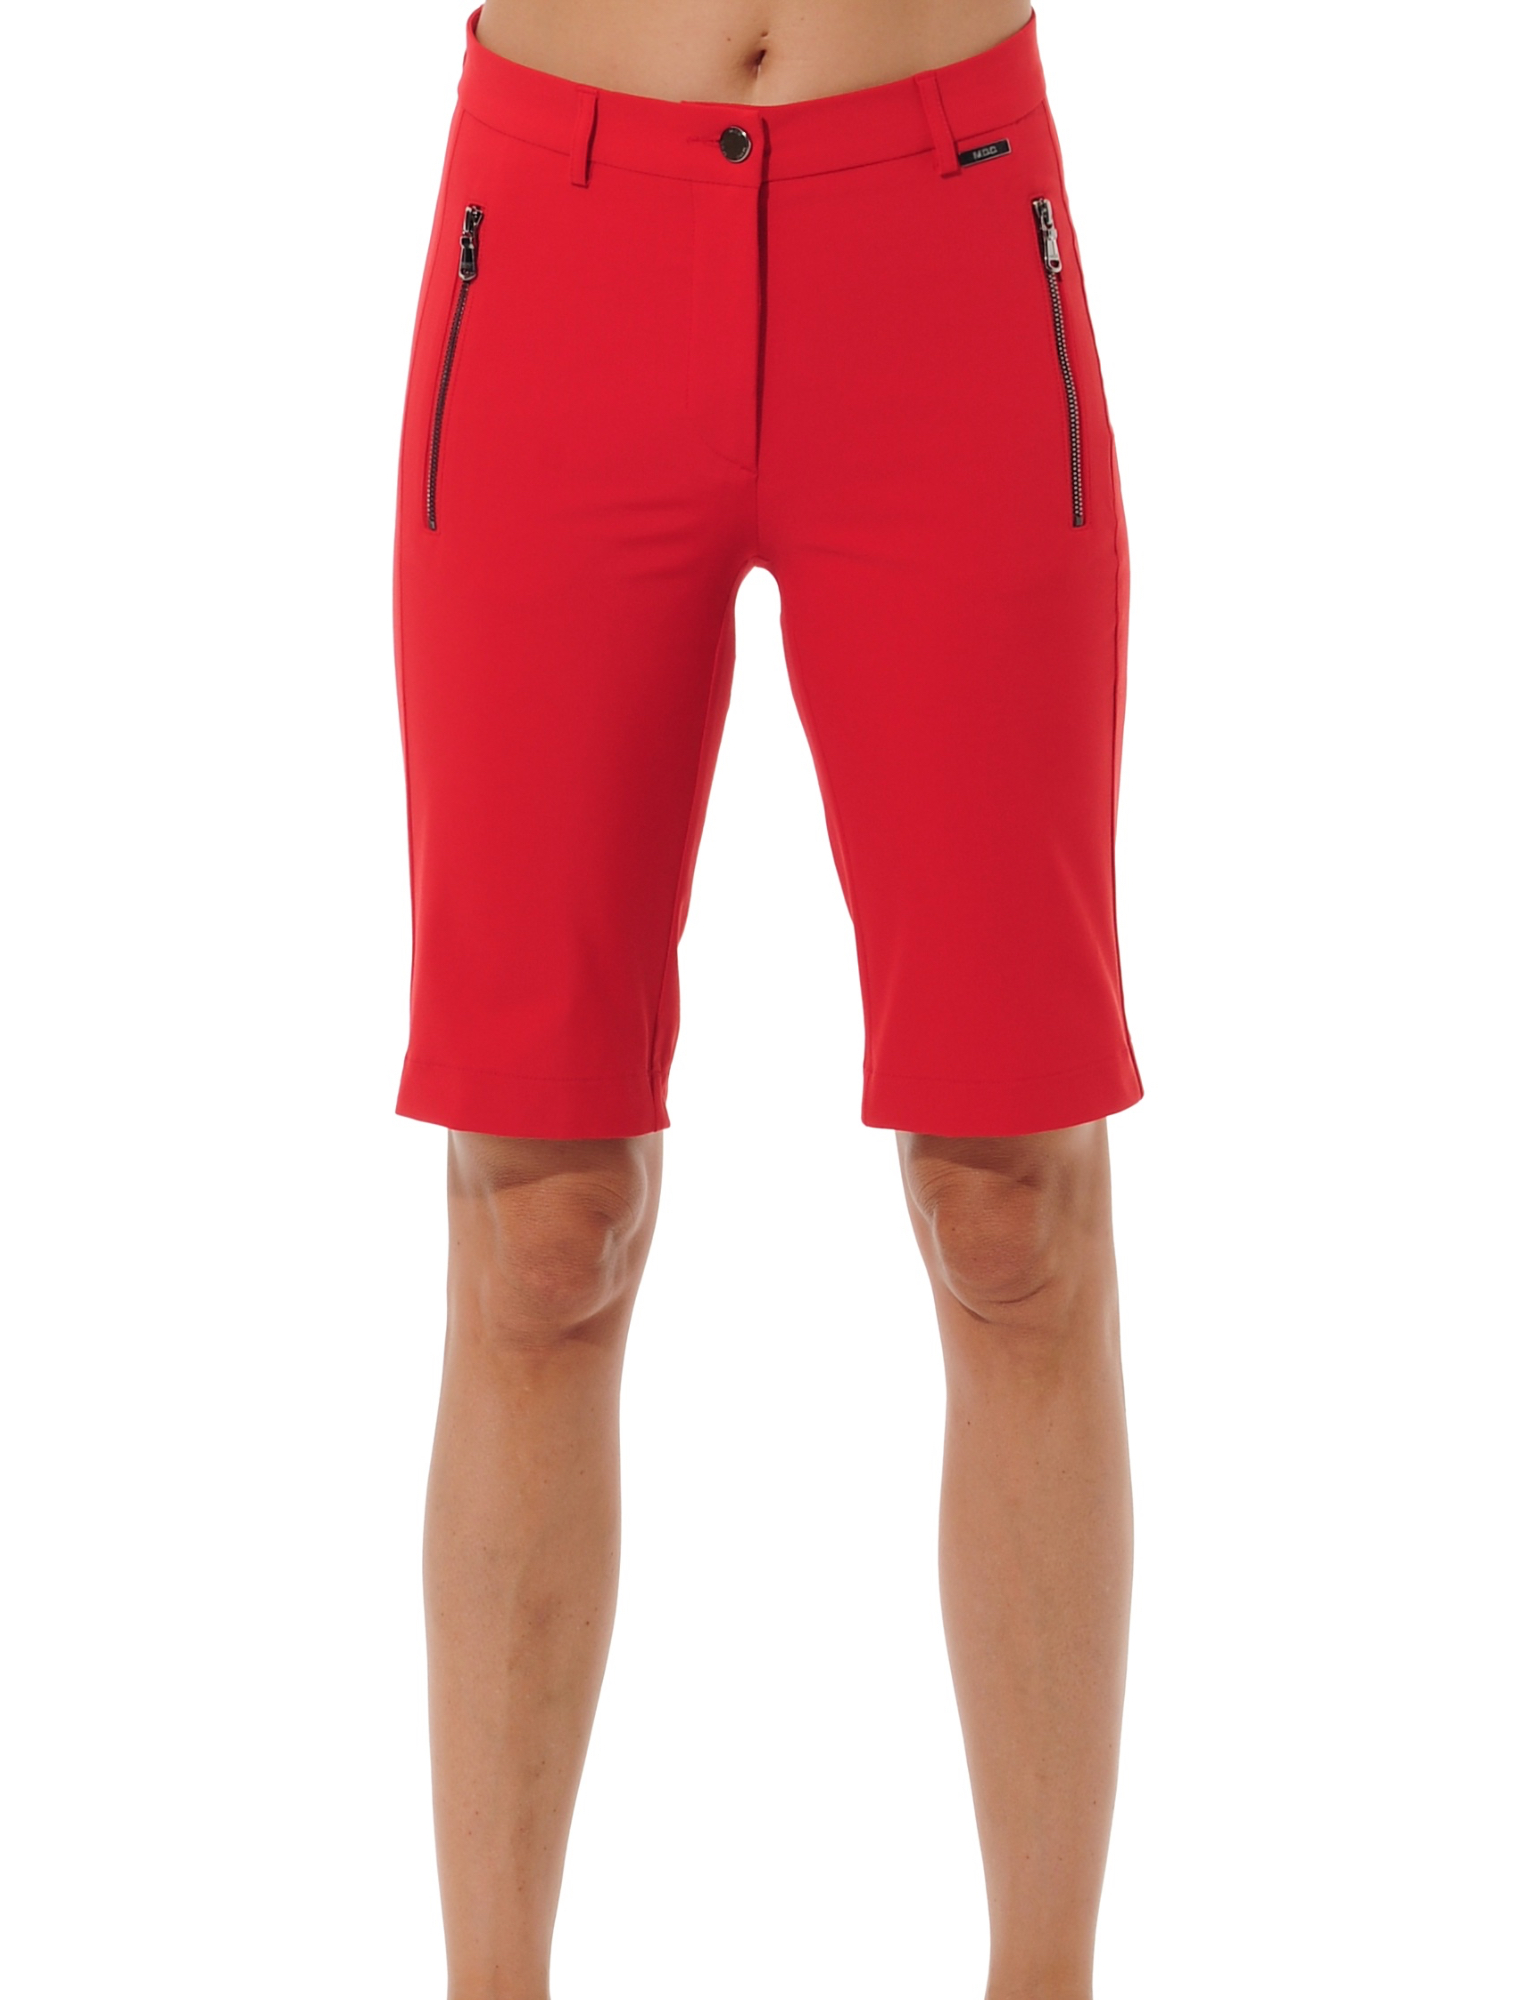 4way stretch golf bermuda shorts red